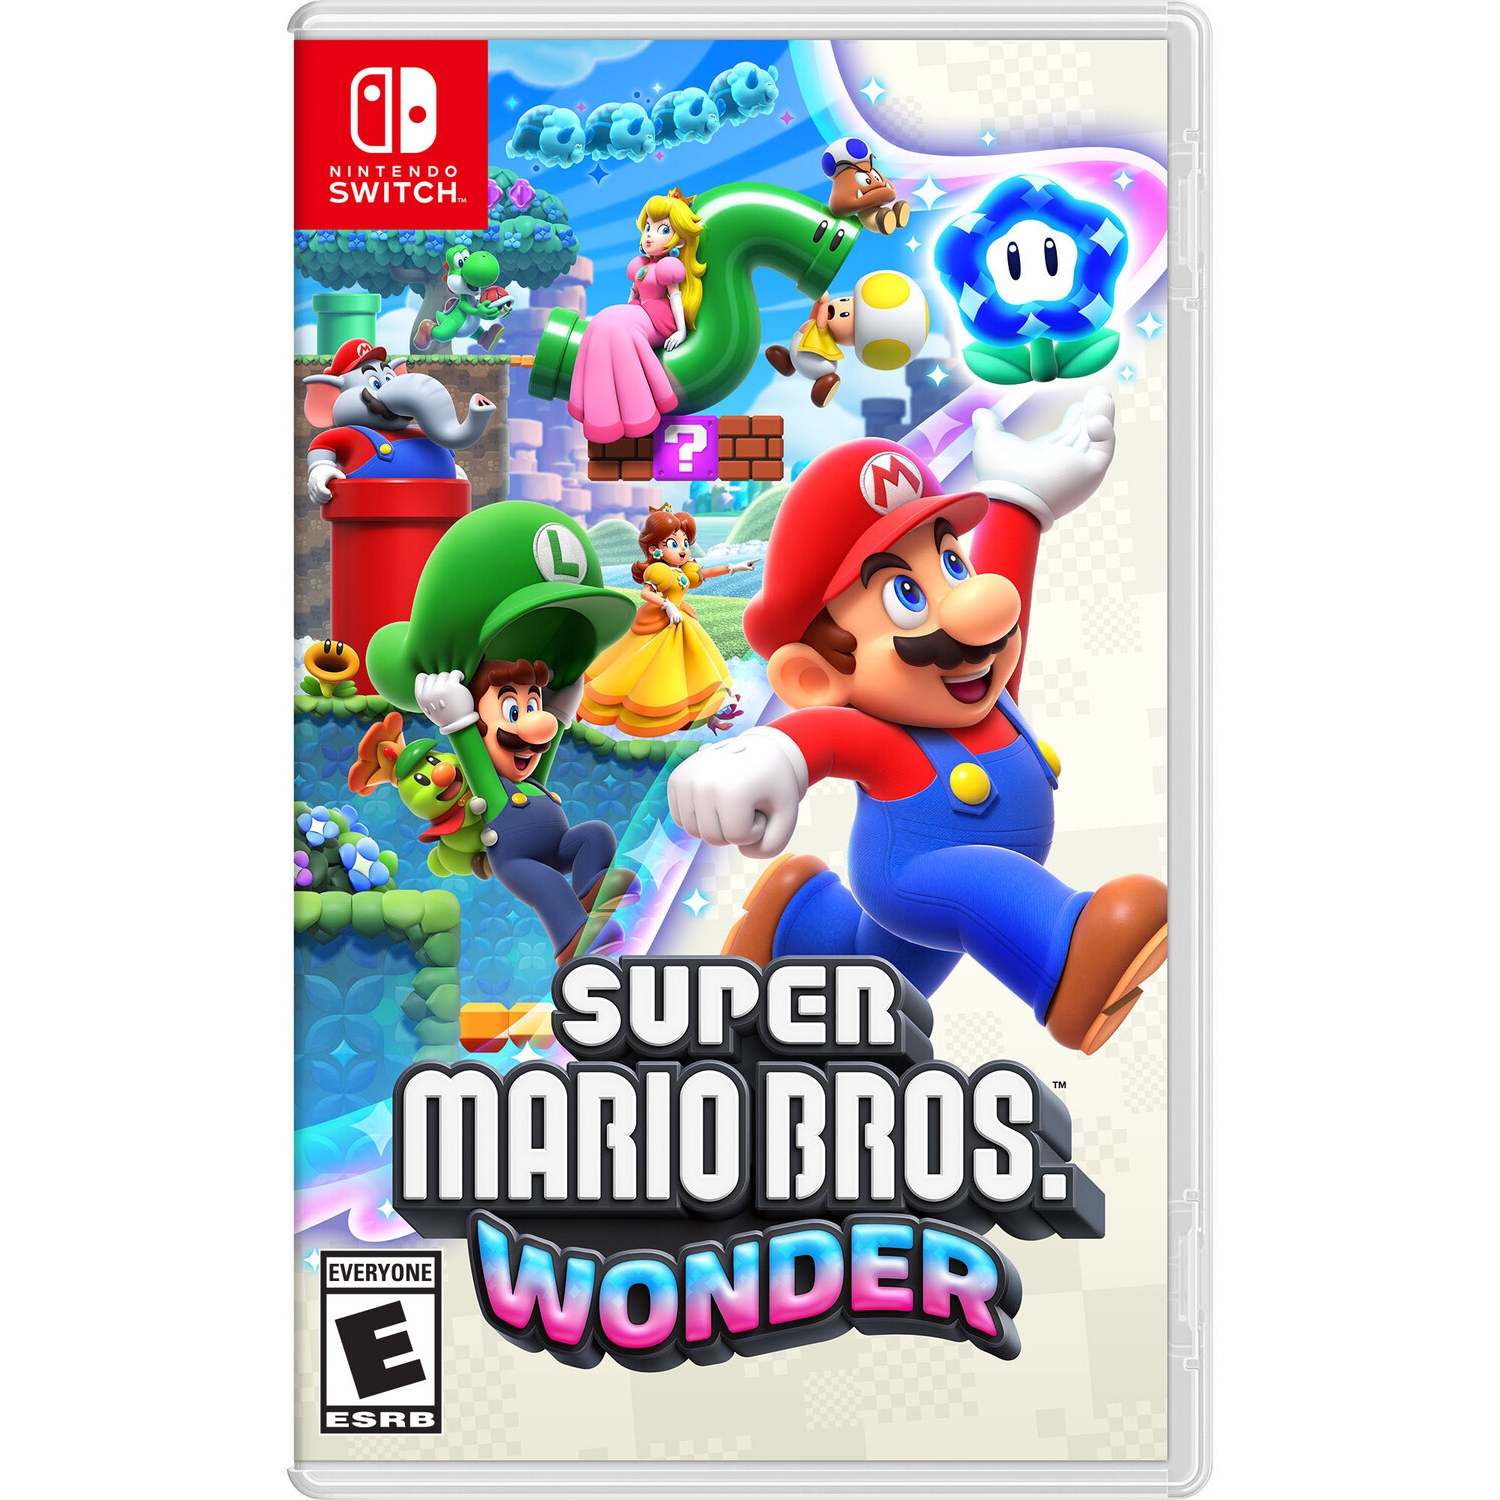 Super Mario Bros Wonder for Nintendo Switch [VIDEOGAMES]